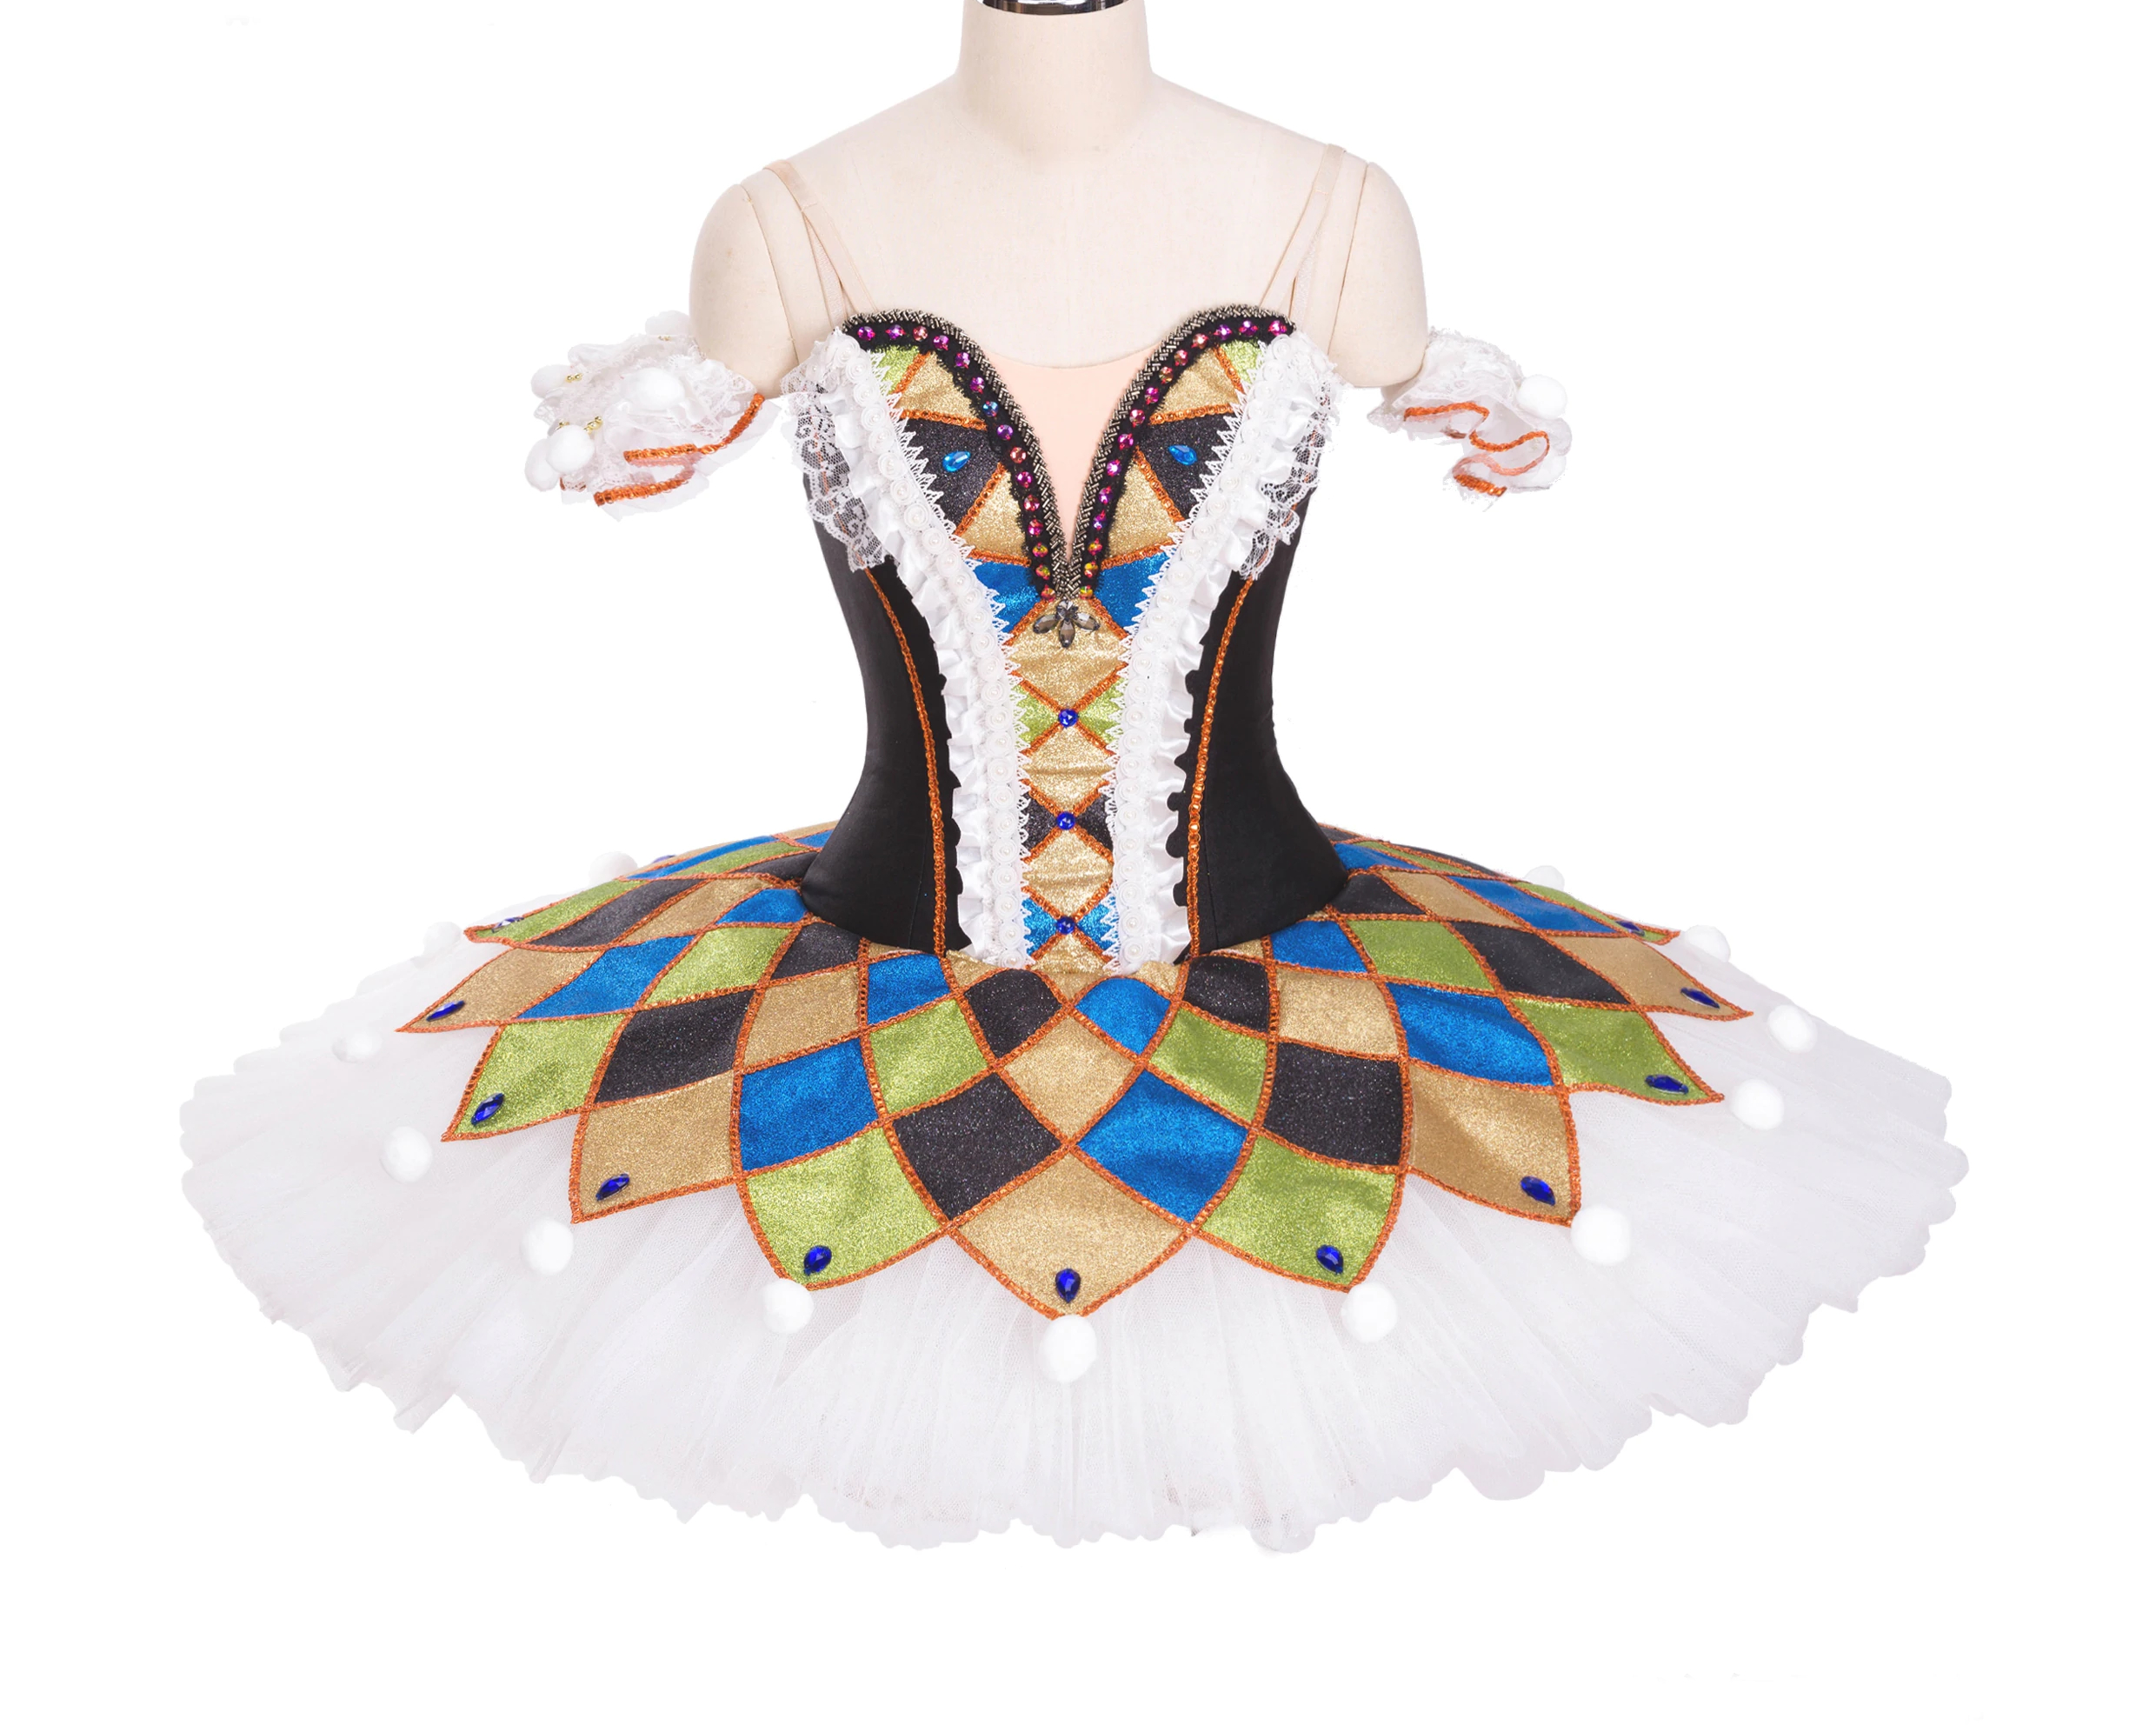 Entanglement Intrusion Slightly Professional Classical Ballet Columbine Doll Costume - Arabesque Life